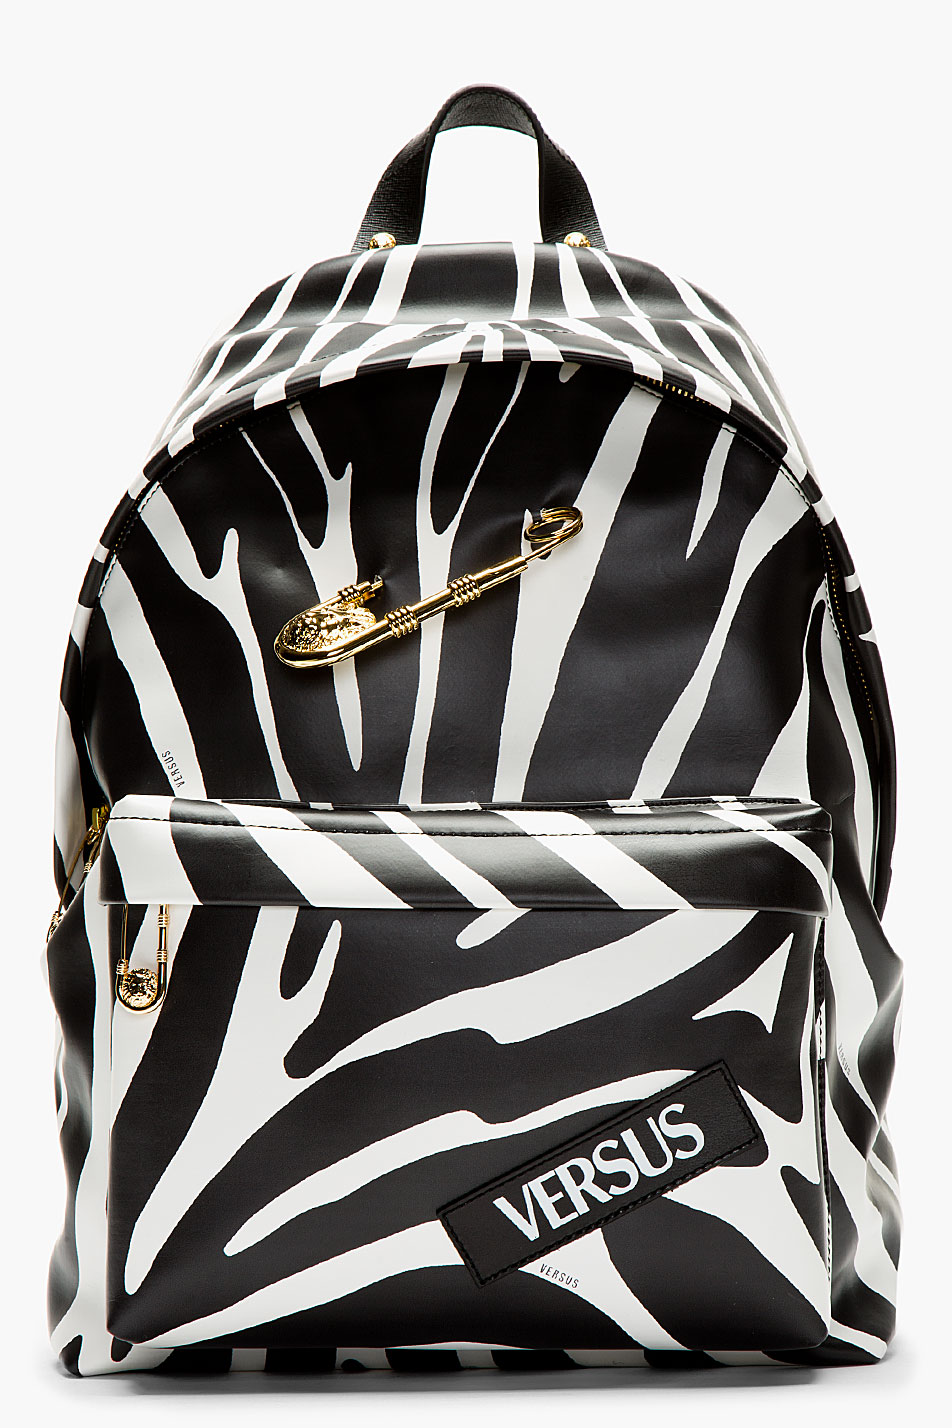 Zebra Print × Safety Pin backpack versus